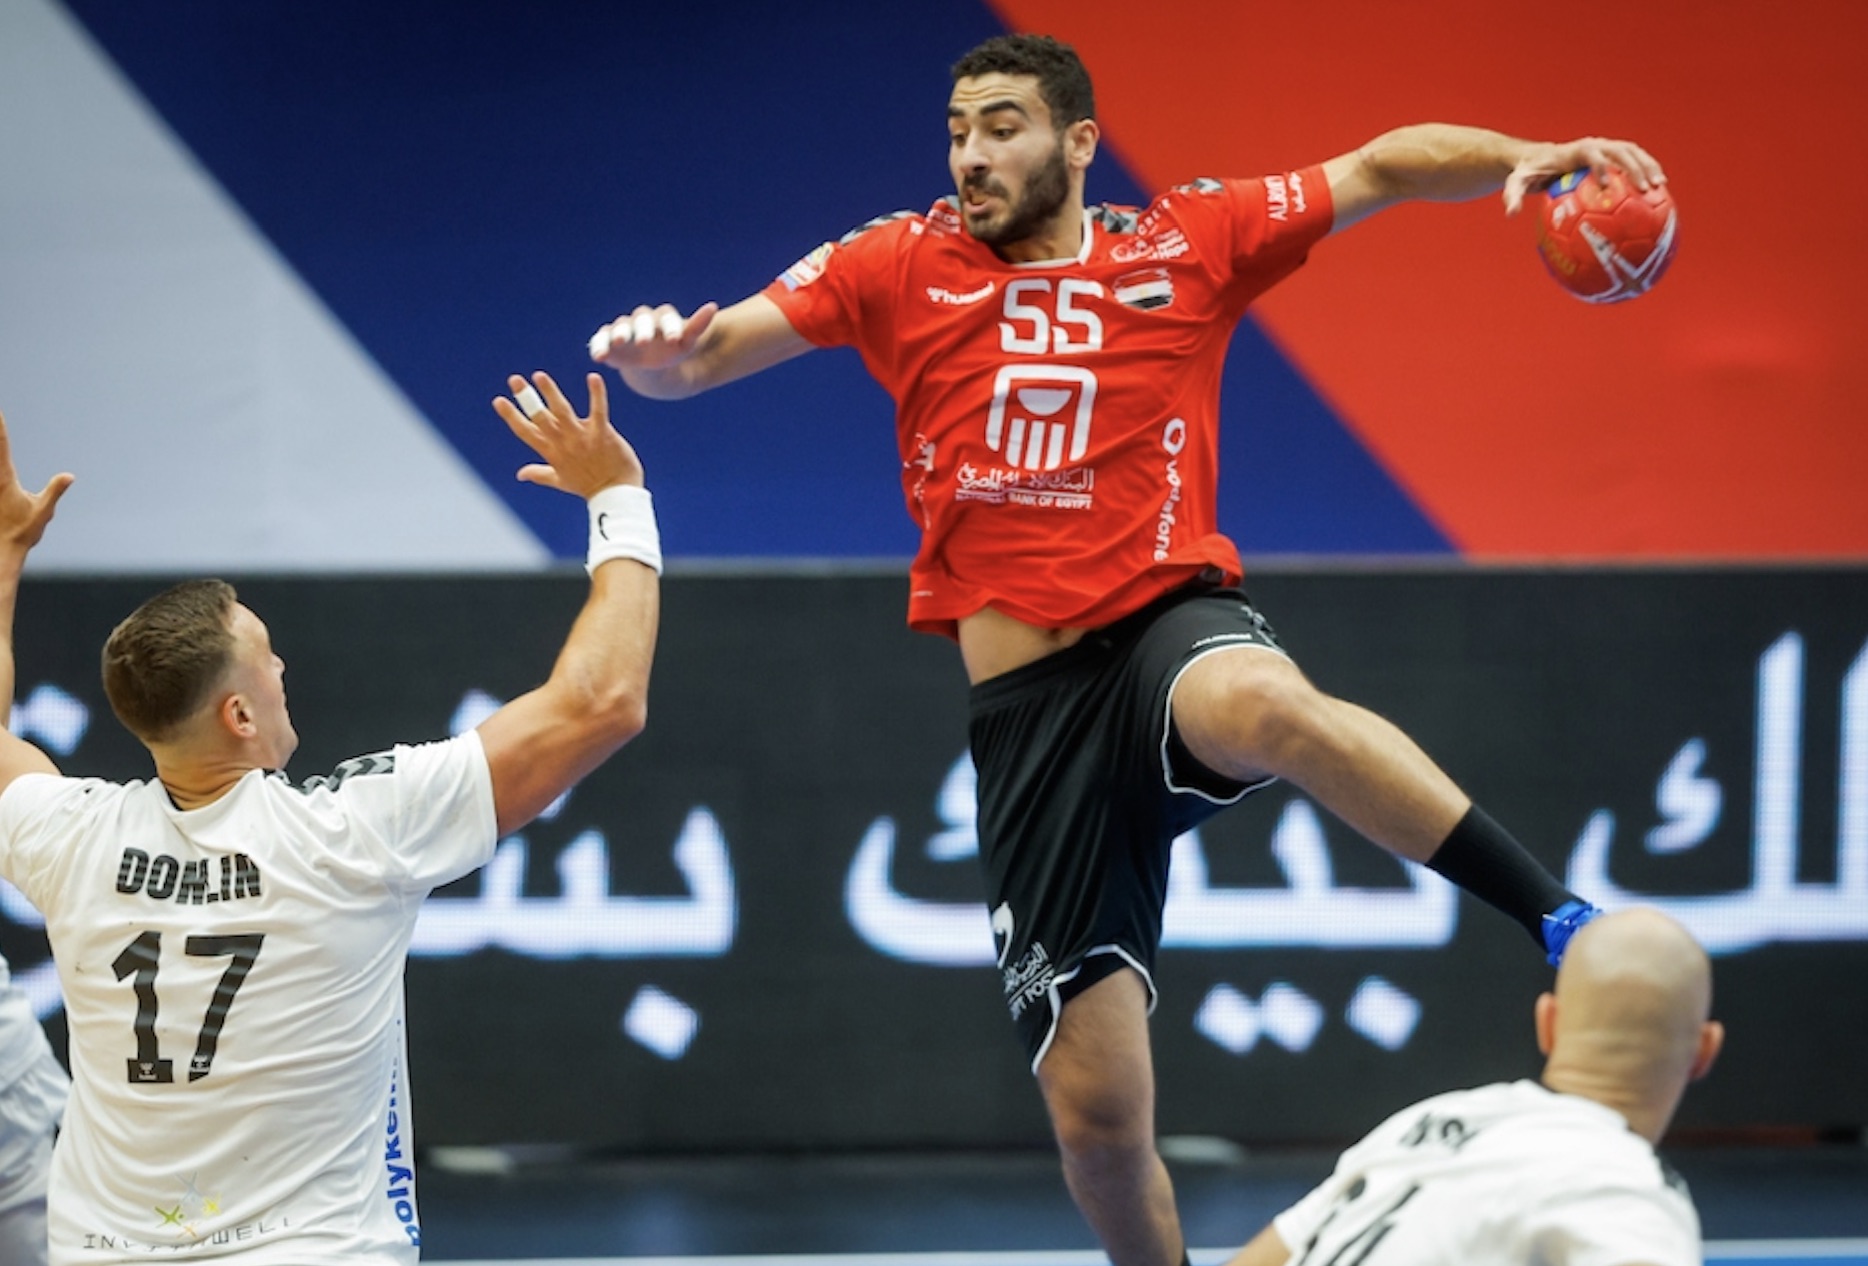 Handball World Championship Egypt Defeats United States in a 3516 win